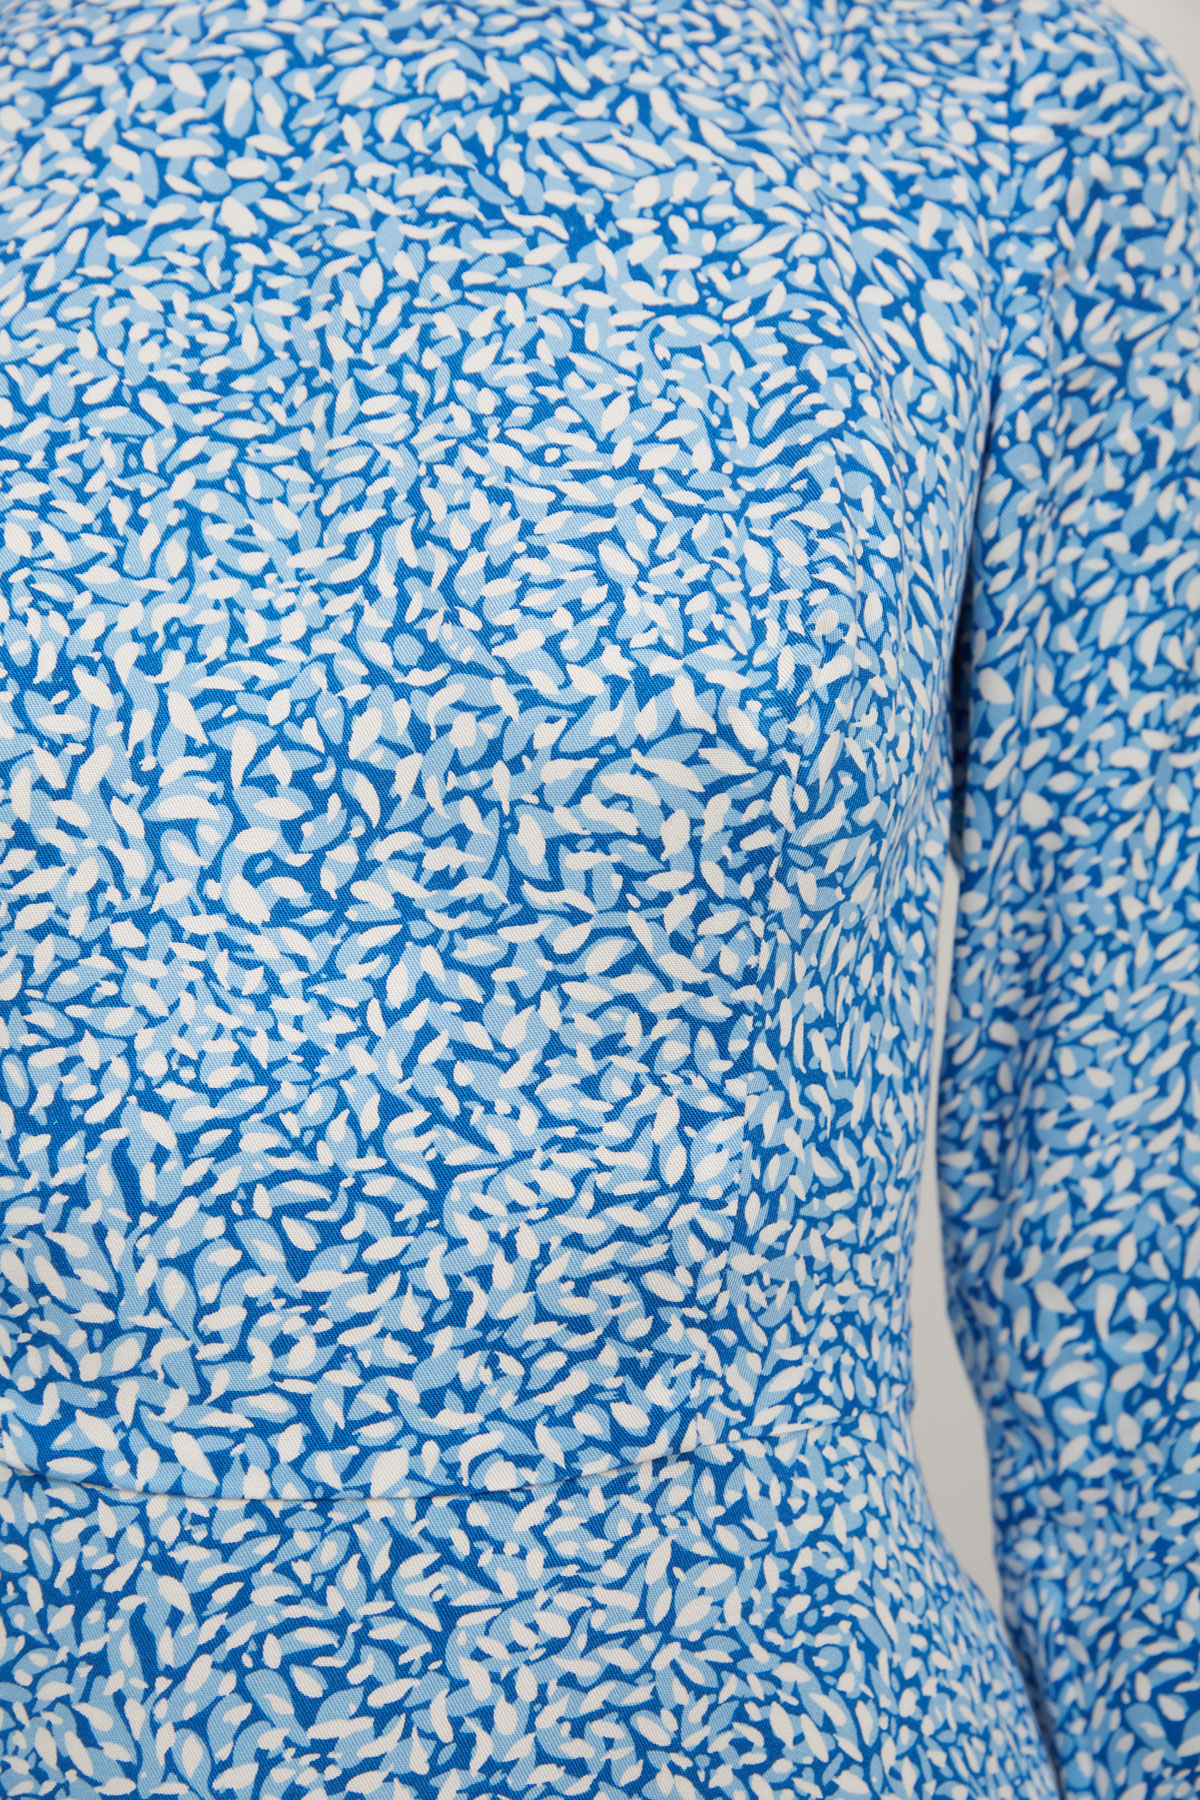 Viscose midi dress in blue drops print, photo 4